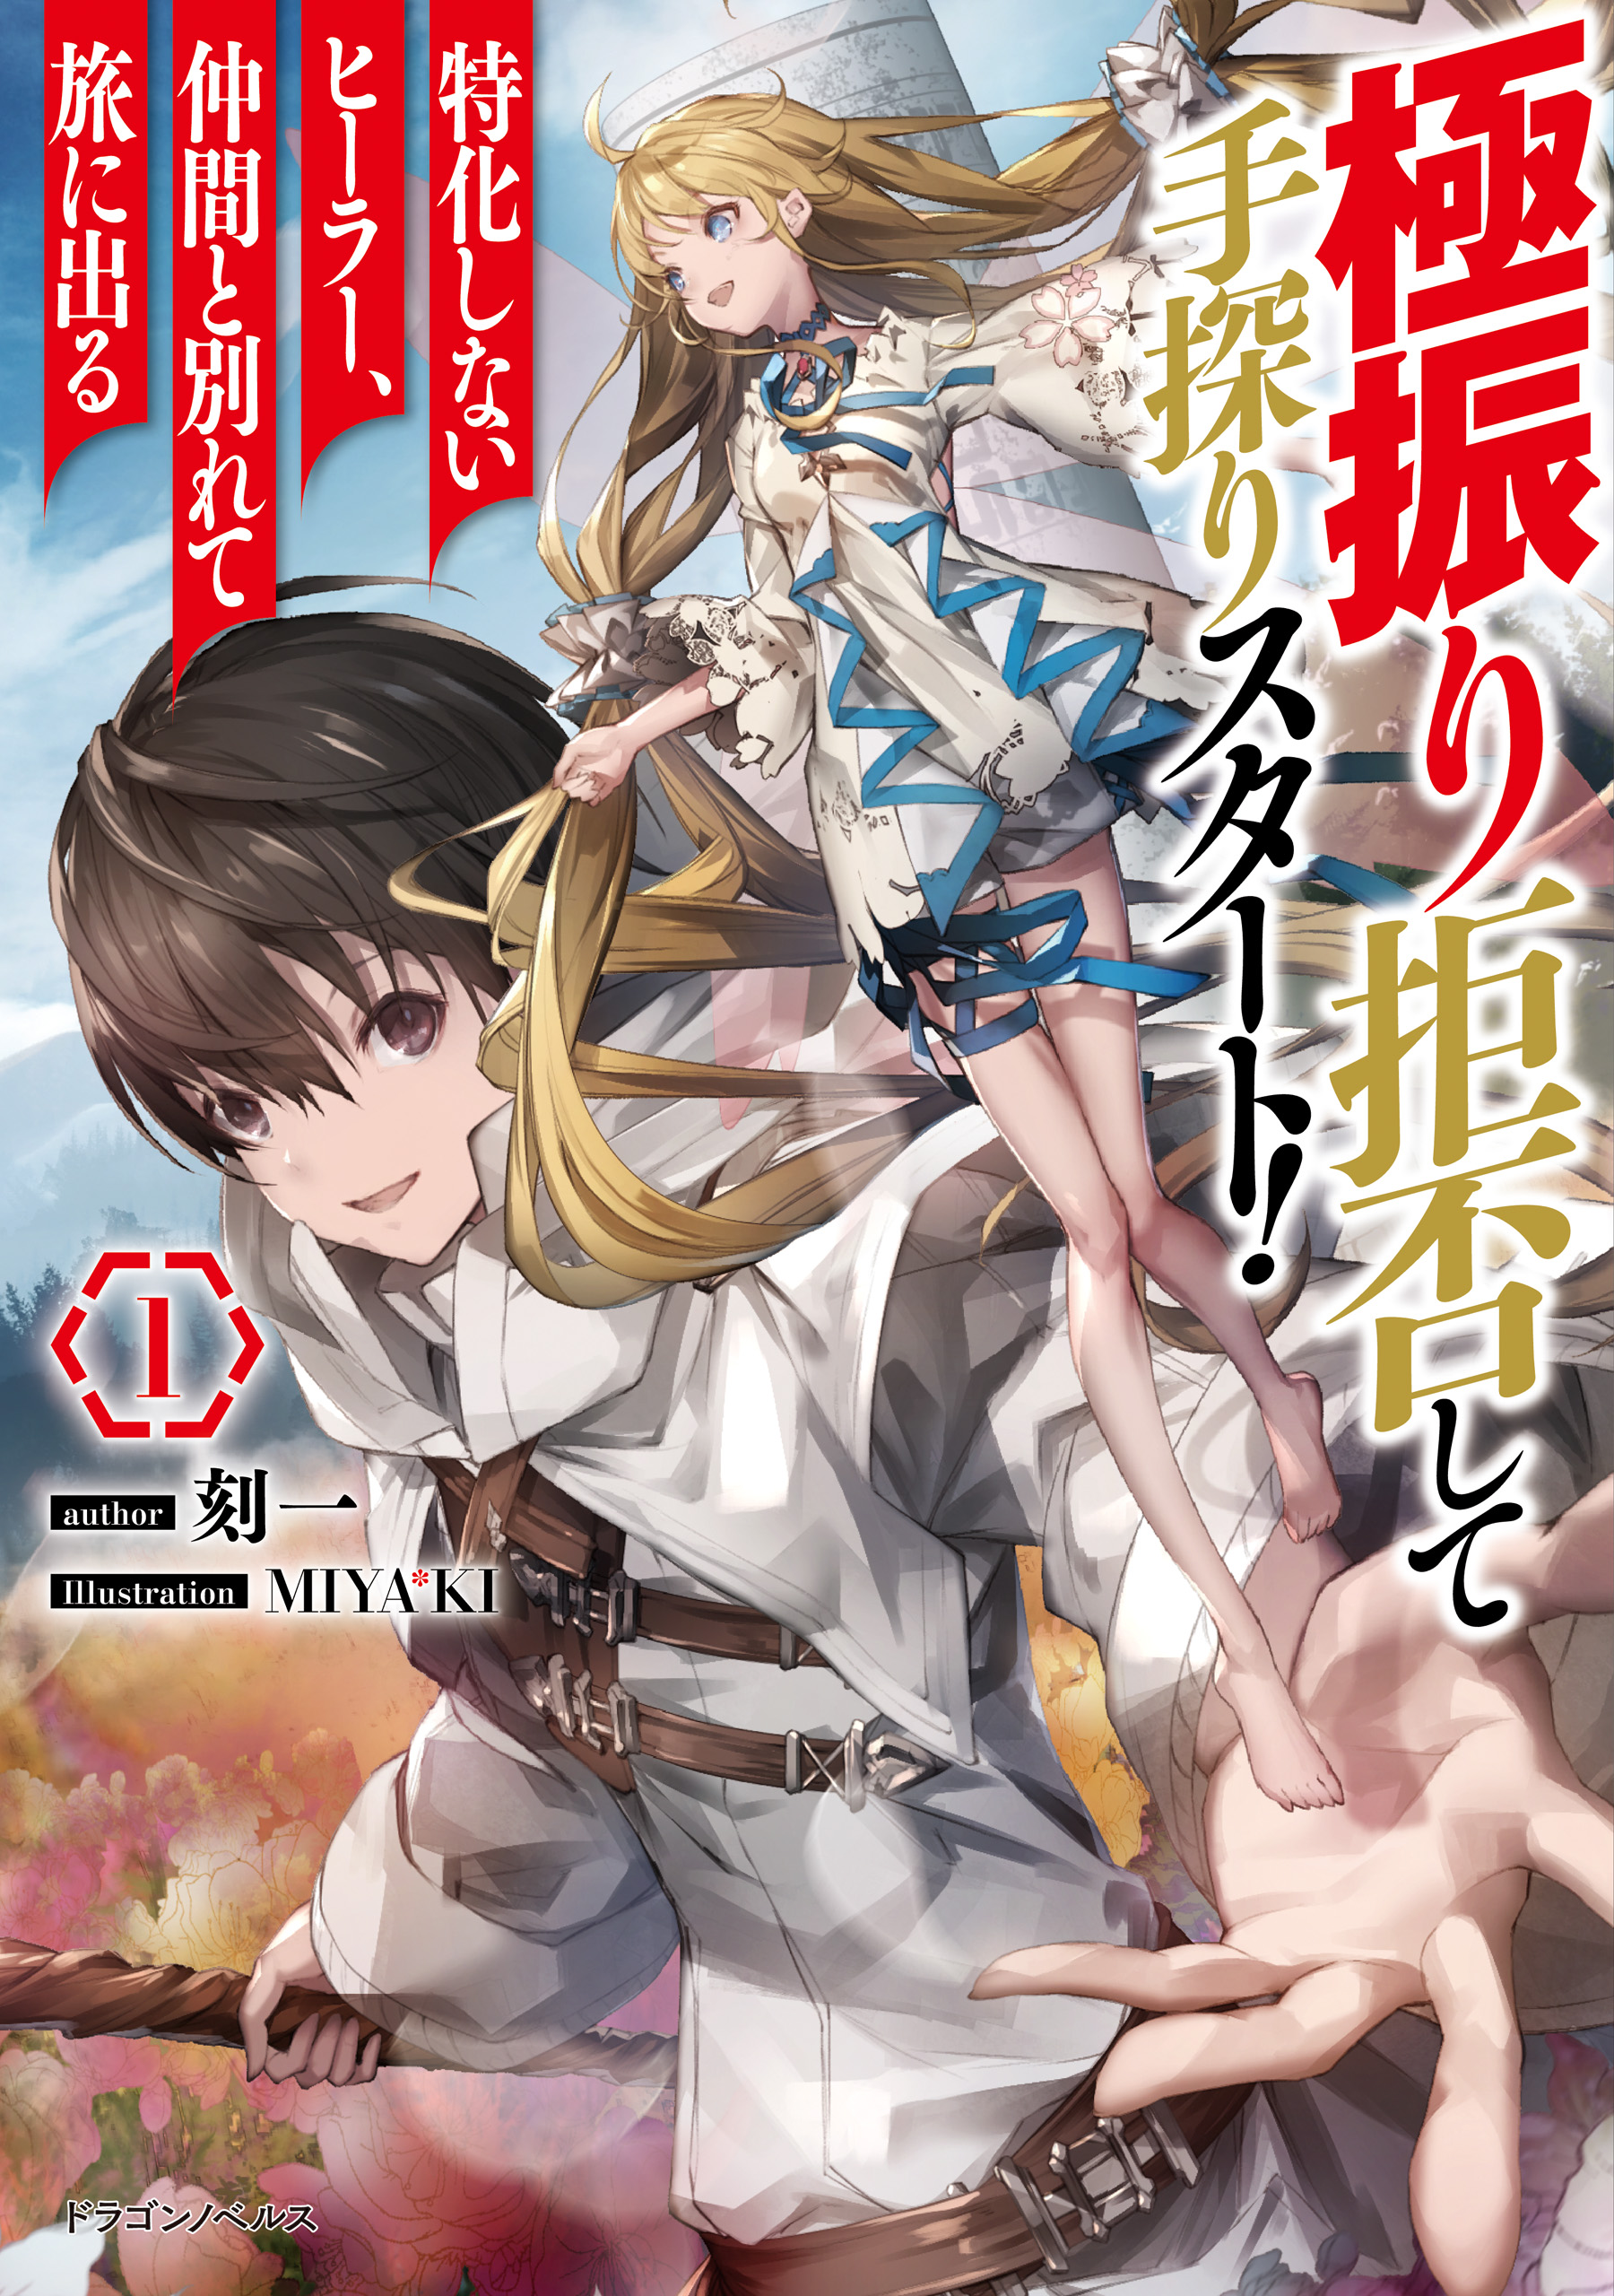 Manga Mogura RE on X: Redo of Healer manga vol 10 by Rui Tsukiyo, Haga  Souken, Shiokonbu. The saga (including light novel & manga) has 2.5 million  in circulation.  / X